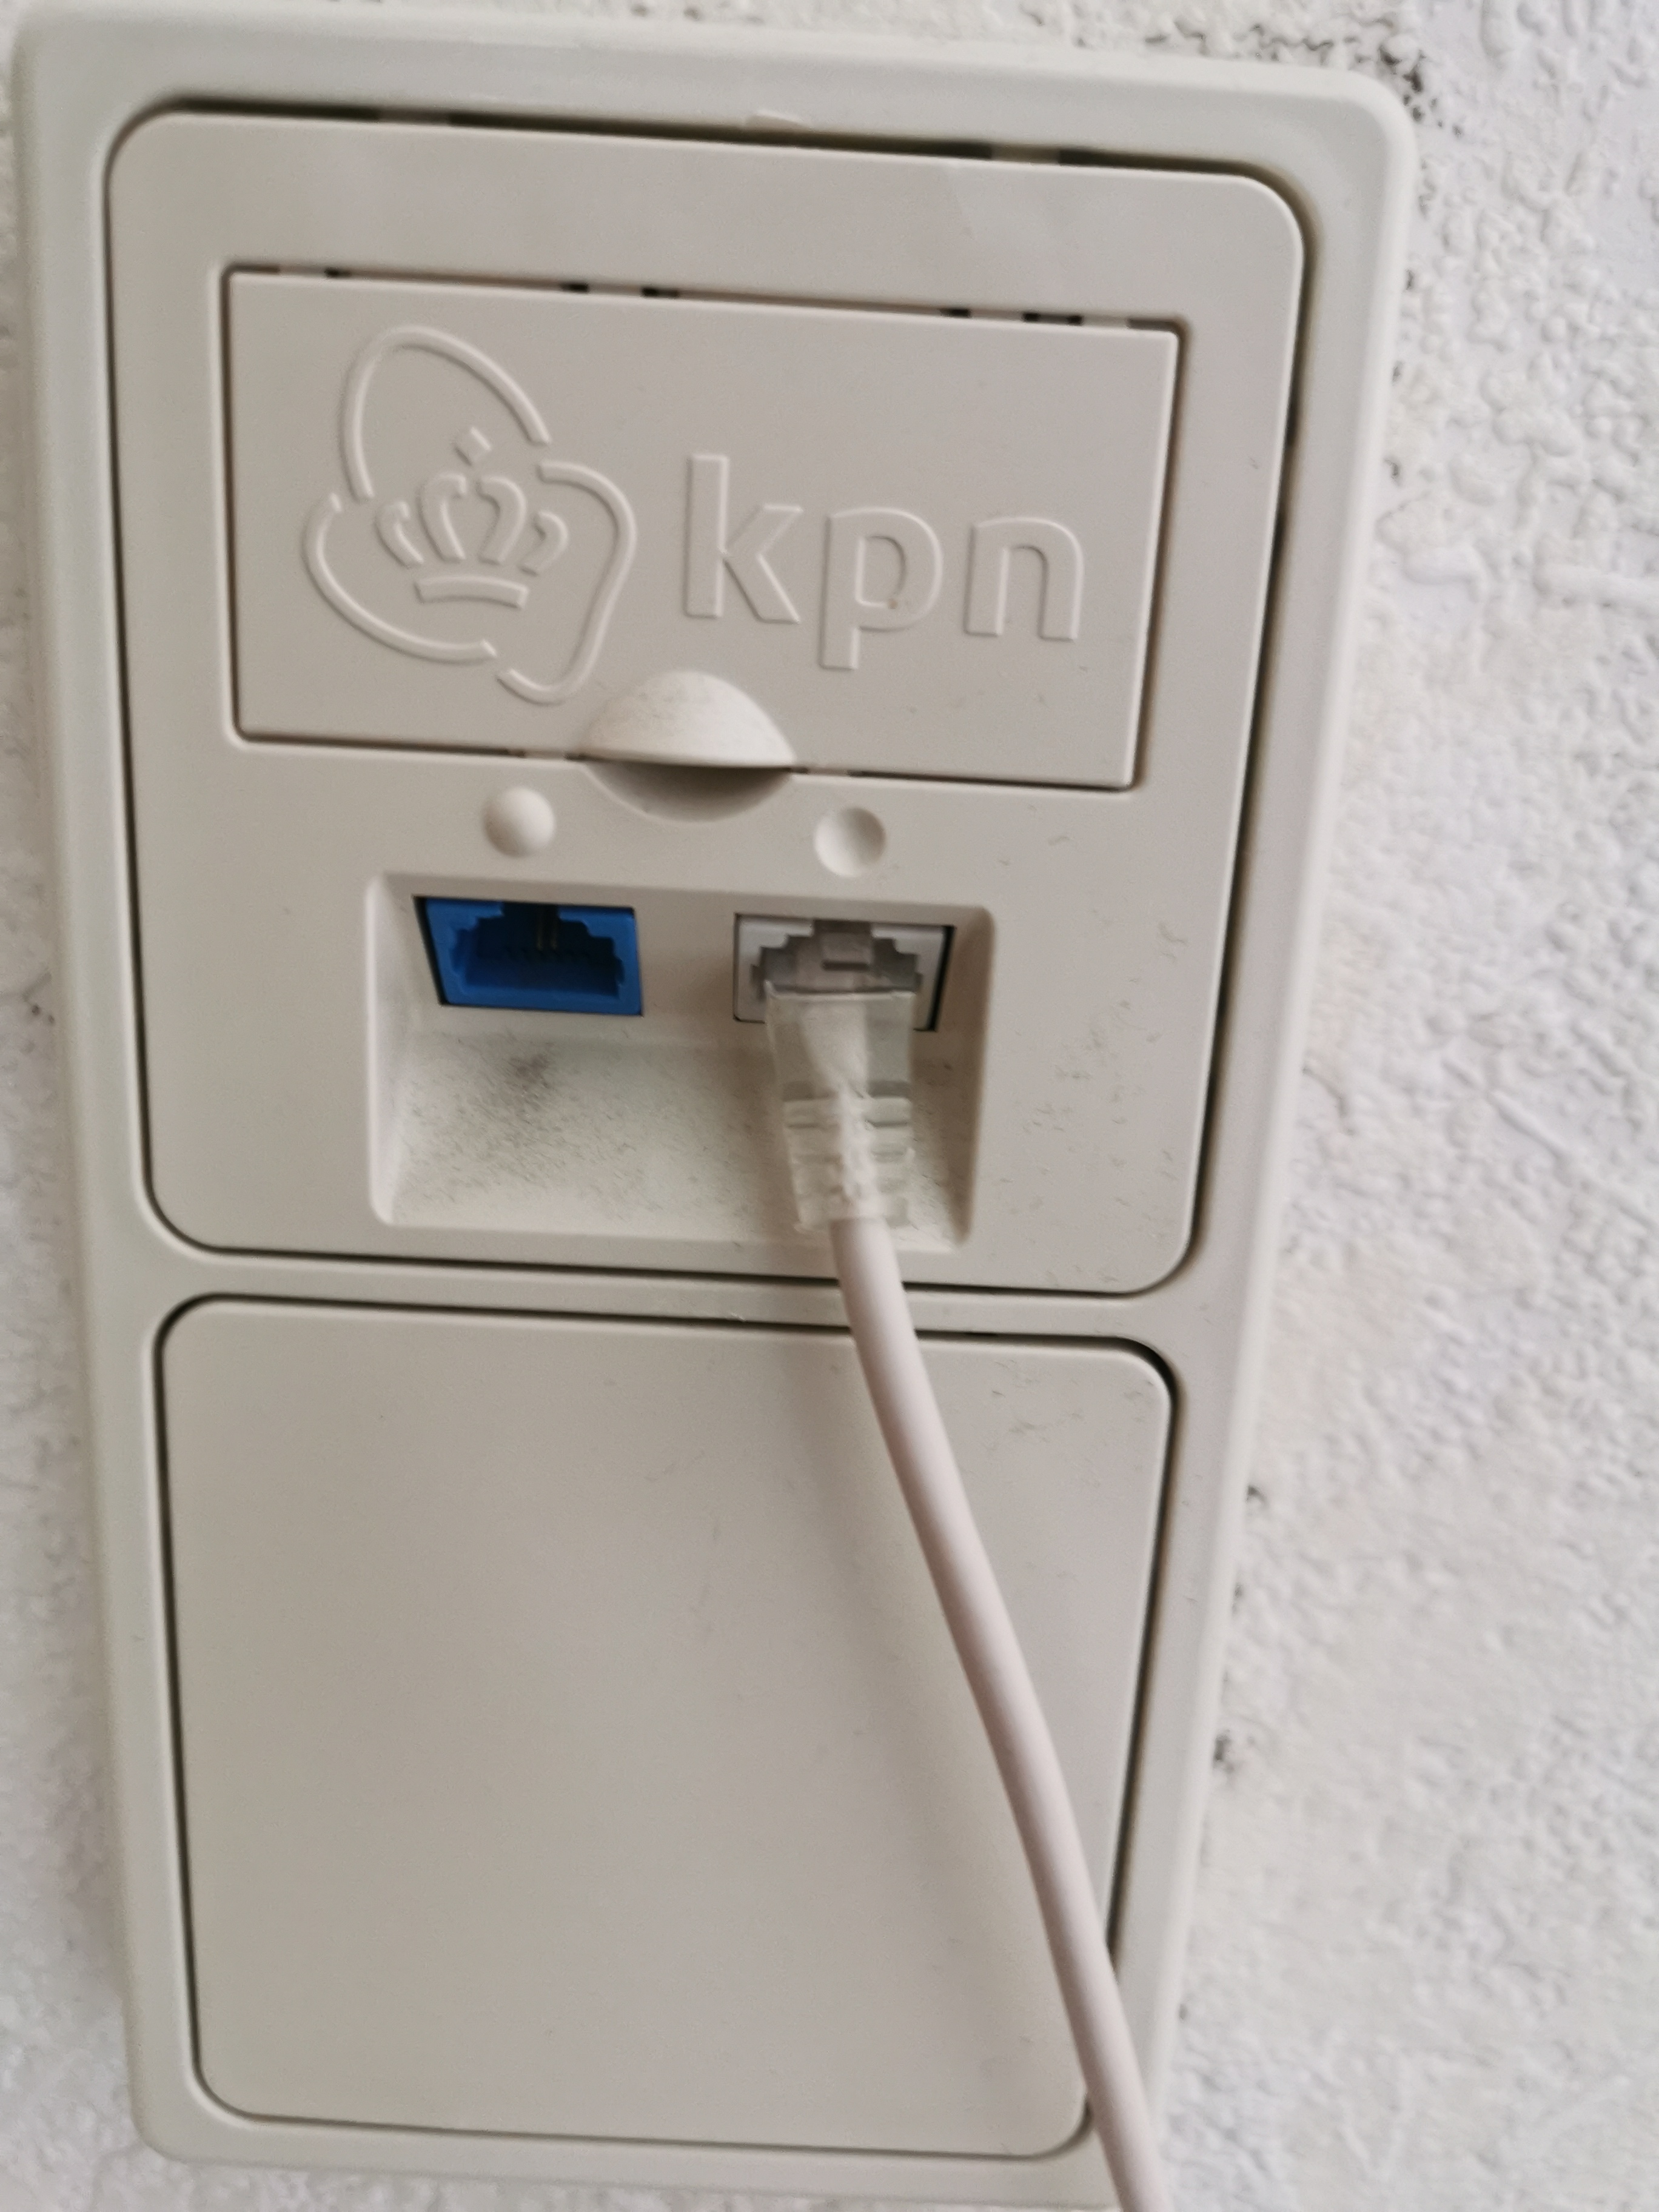 welke kabel heb ik nodig tussen is ra punt en modem kpn community